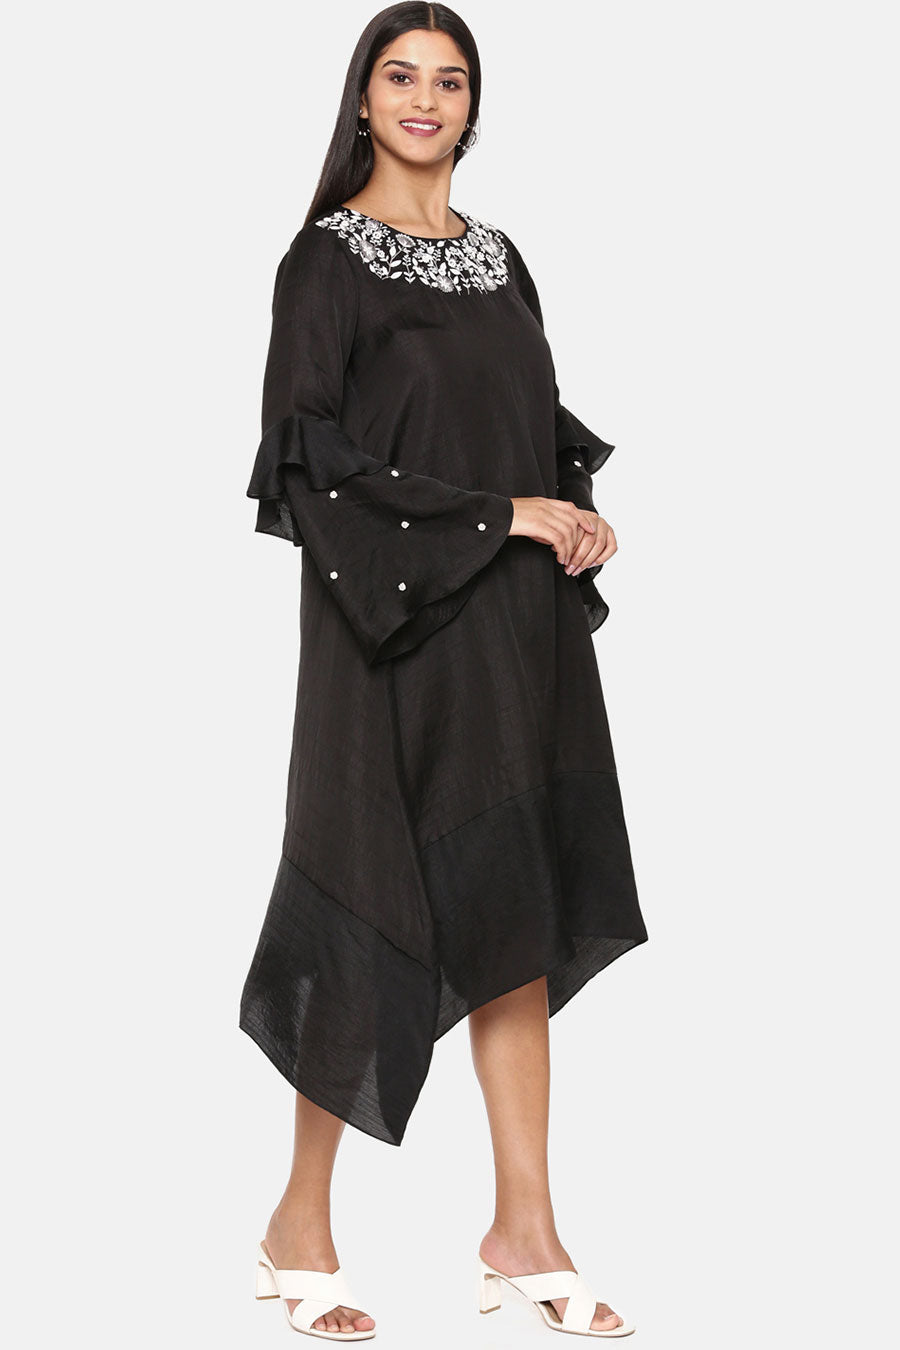 Black Embroidered Dress